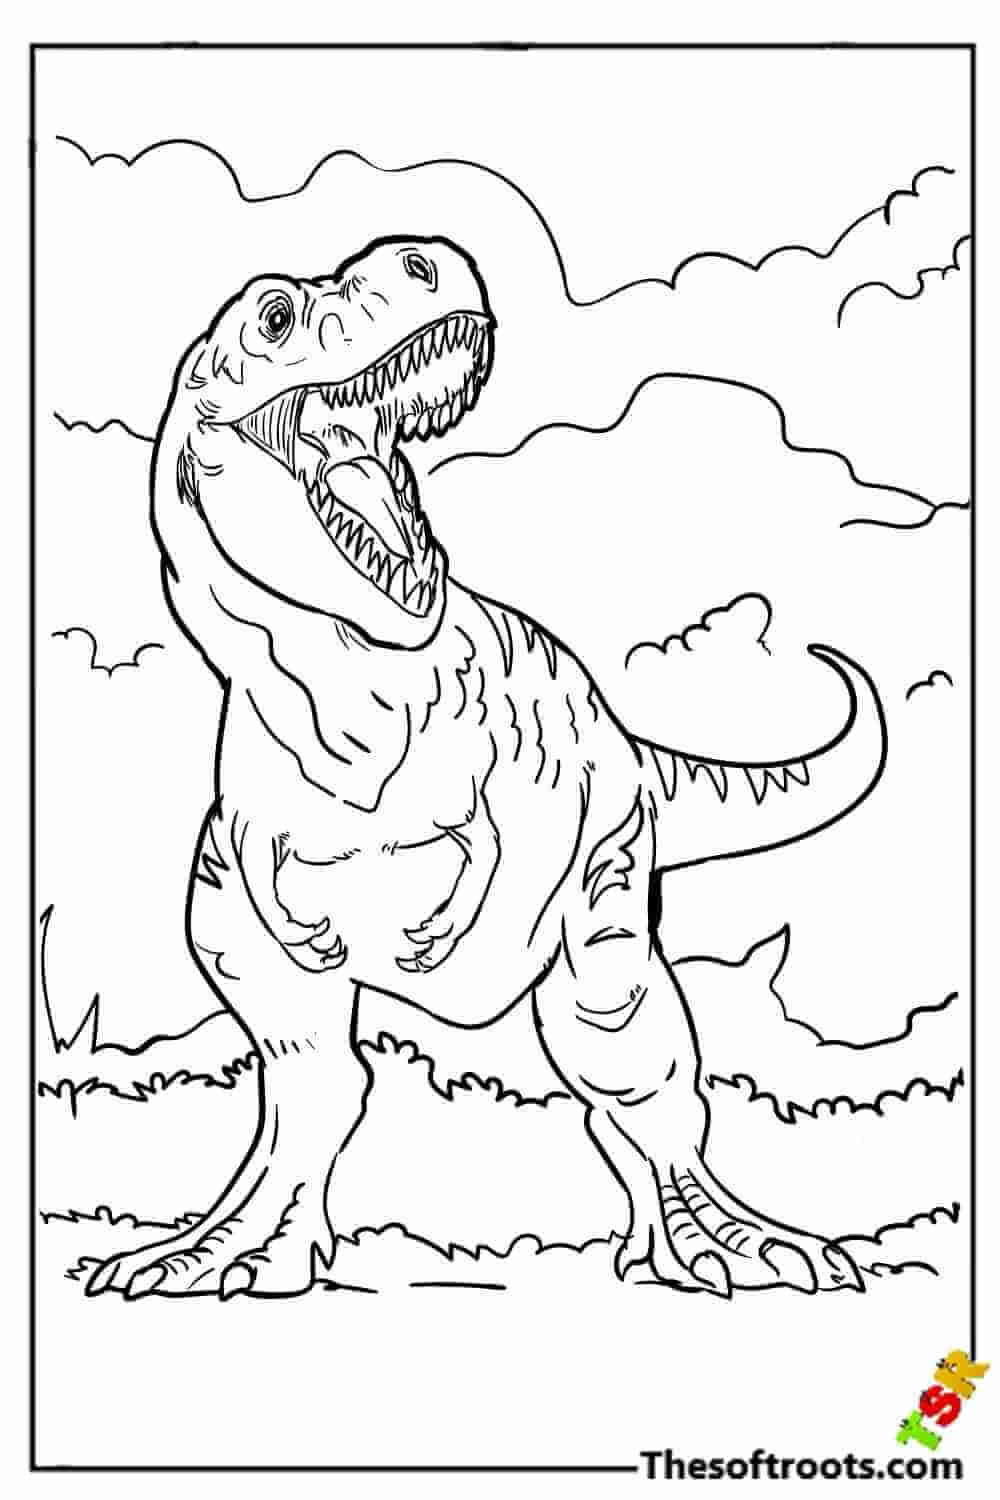 T-Rex Dinosaur coloring pages